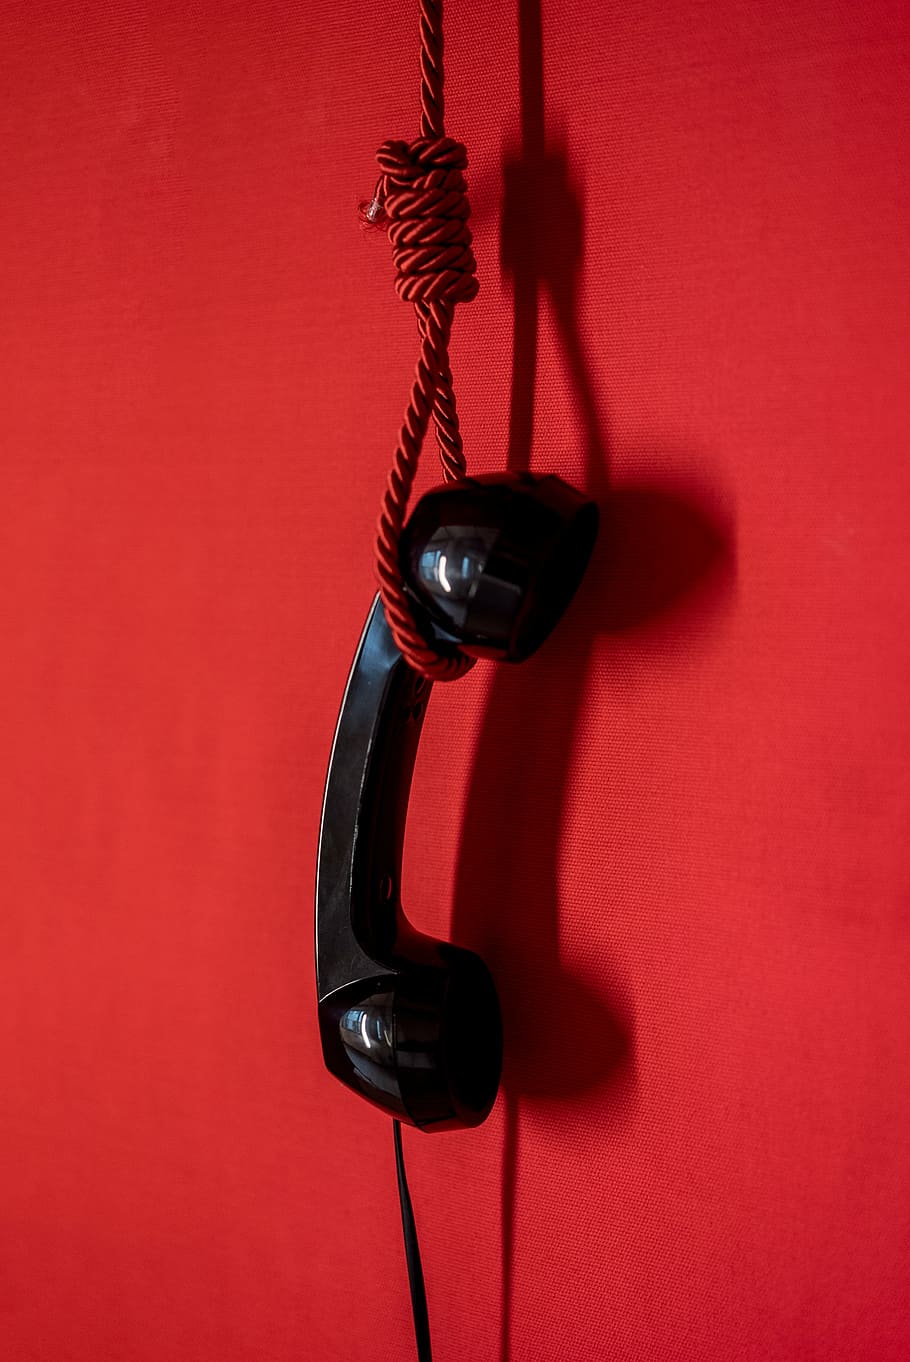 HD wallpaper: black suicide telephone